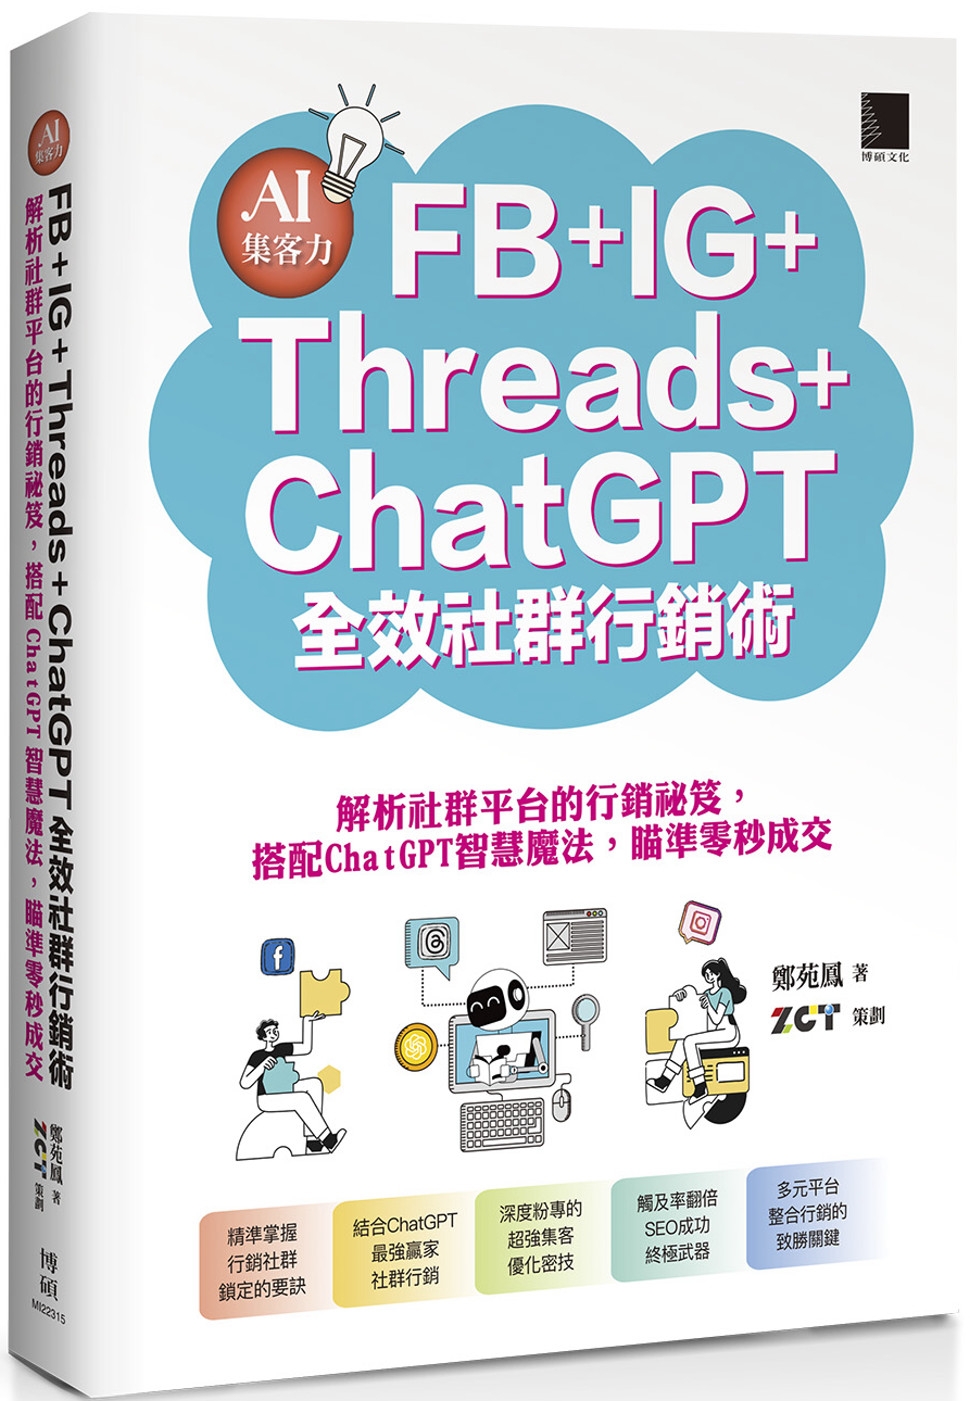 AI集客力！FB+IG+Threads+ChatGPT全效社...